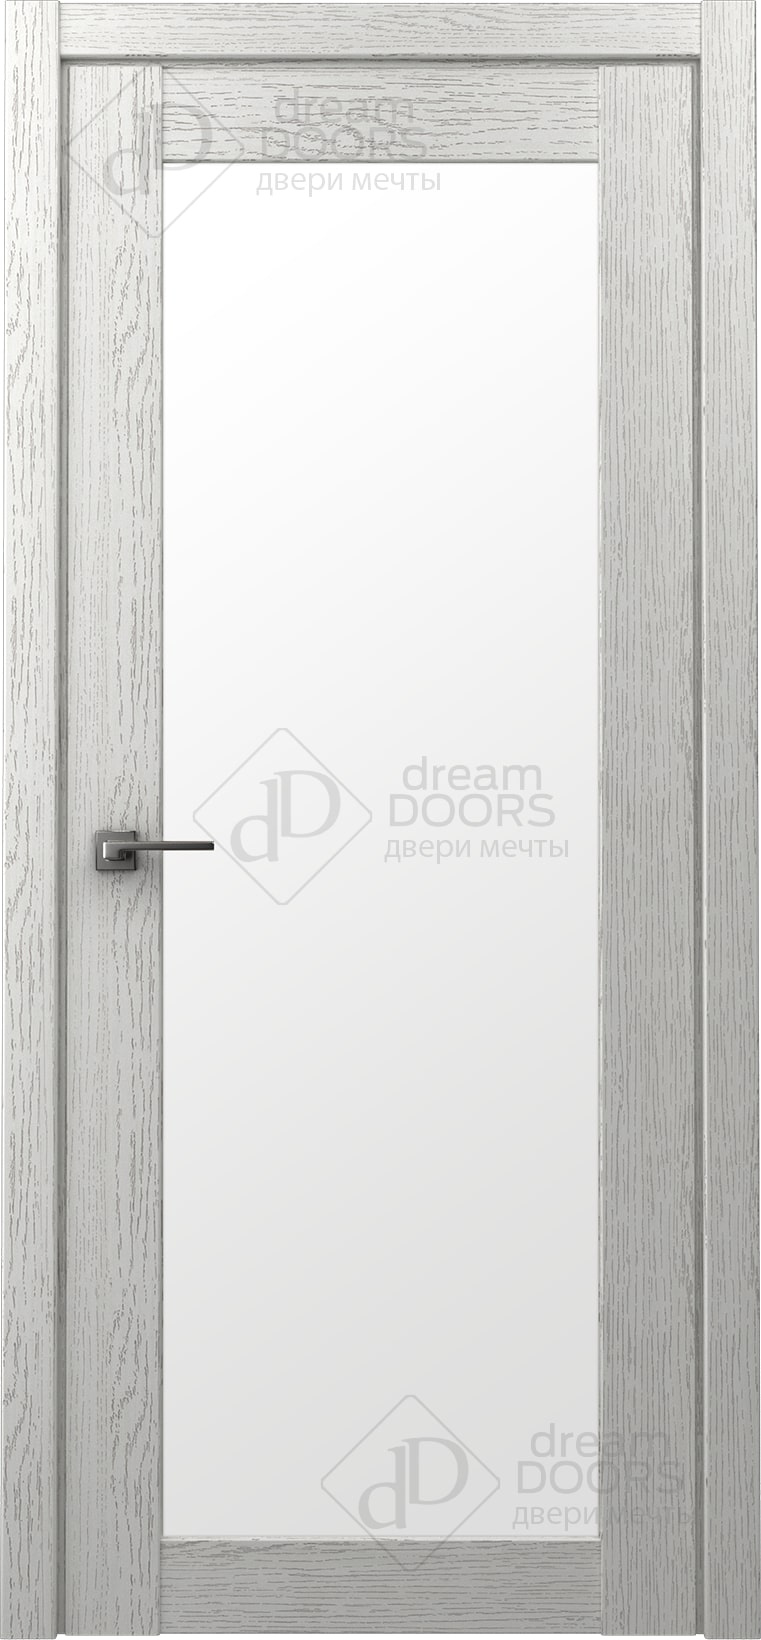 Dream Doors Межкомнатная дверь Престиж 1, арт. 16430 - фото №1